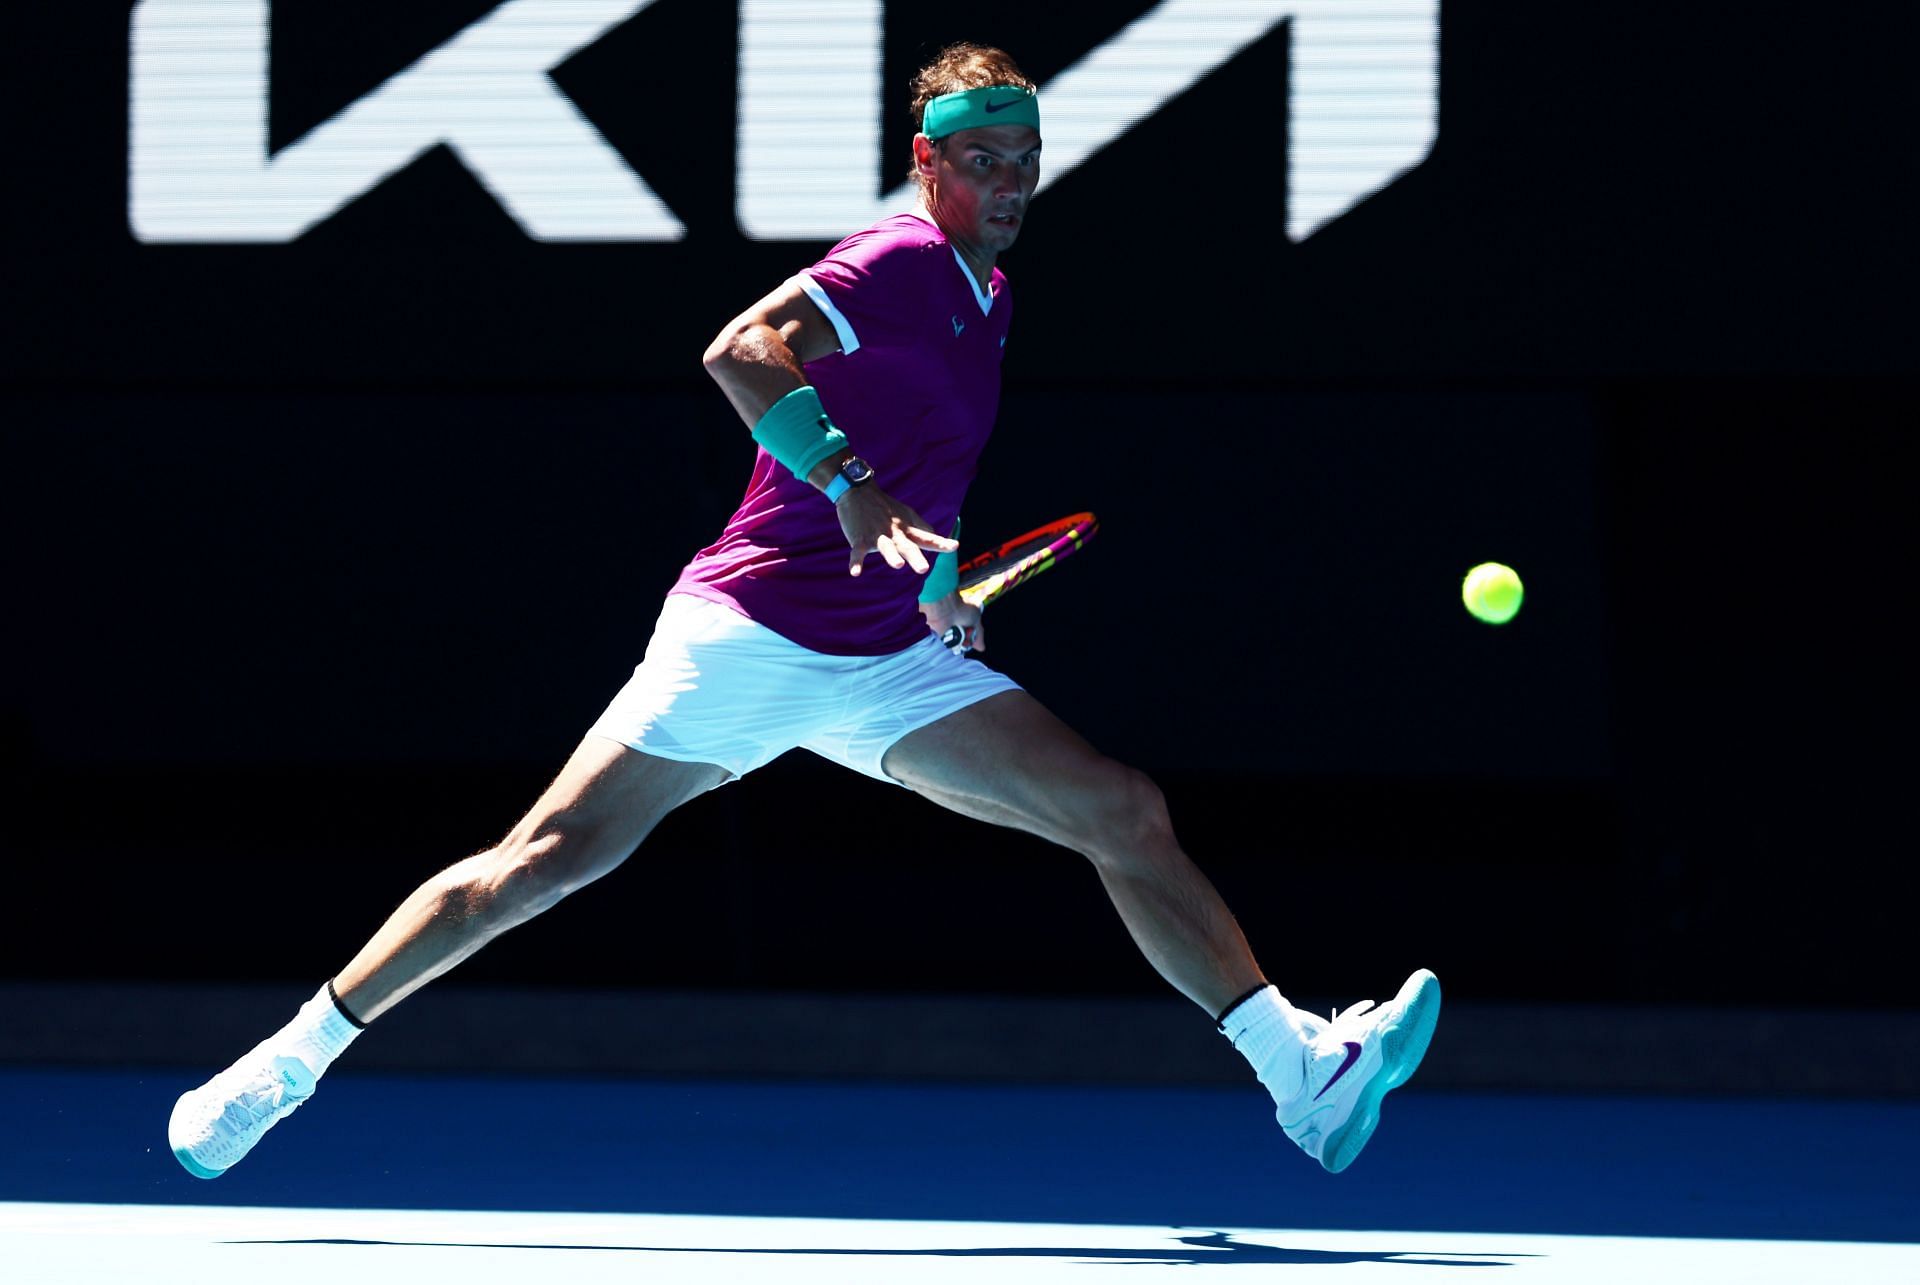 Nadal faces Berrettini in the semifinals of the Australian Open